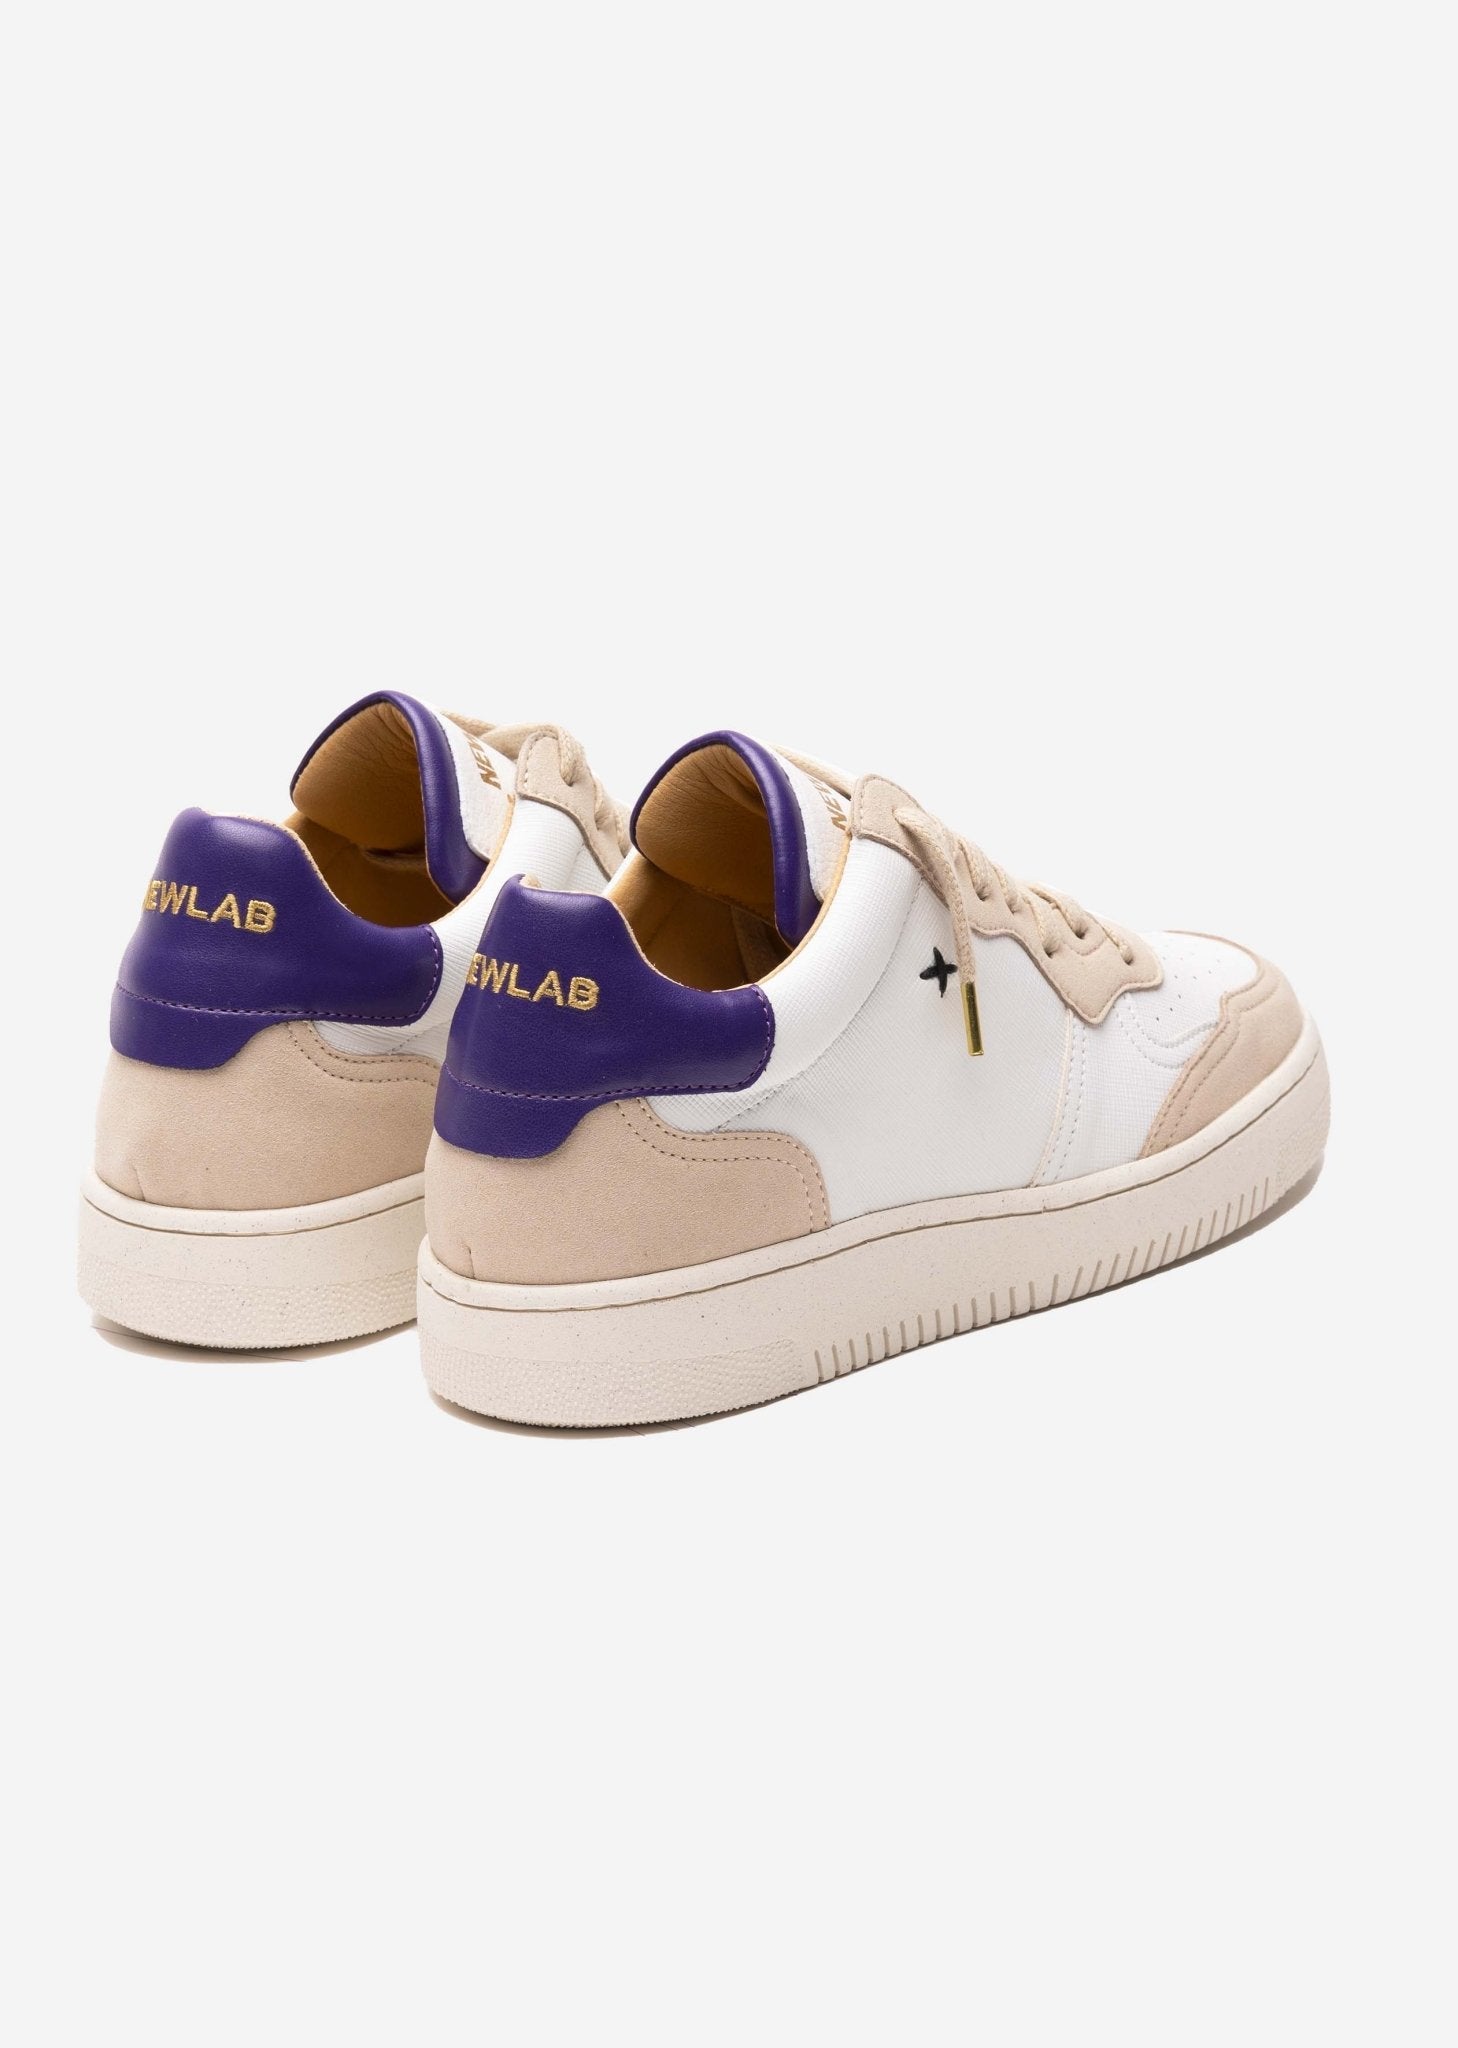 NL11 White/Purple - NEWLAB - Chaussures - NEWLAB